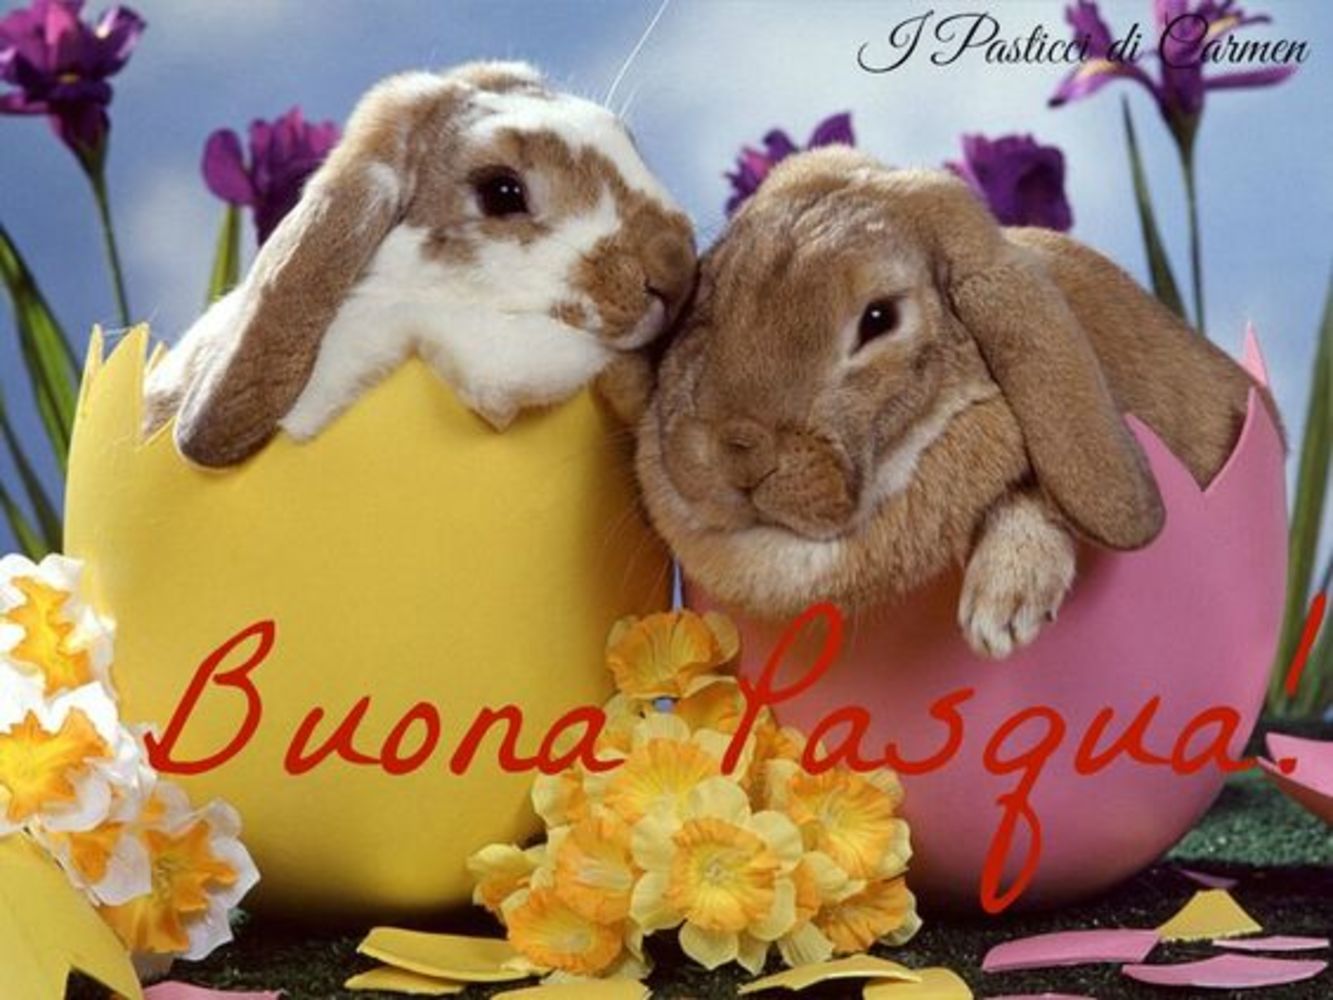 Buona Pasqua Gruppo Facebook